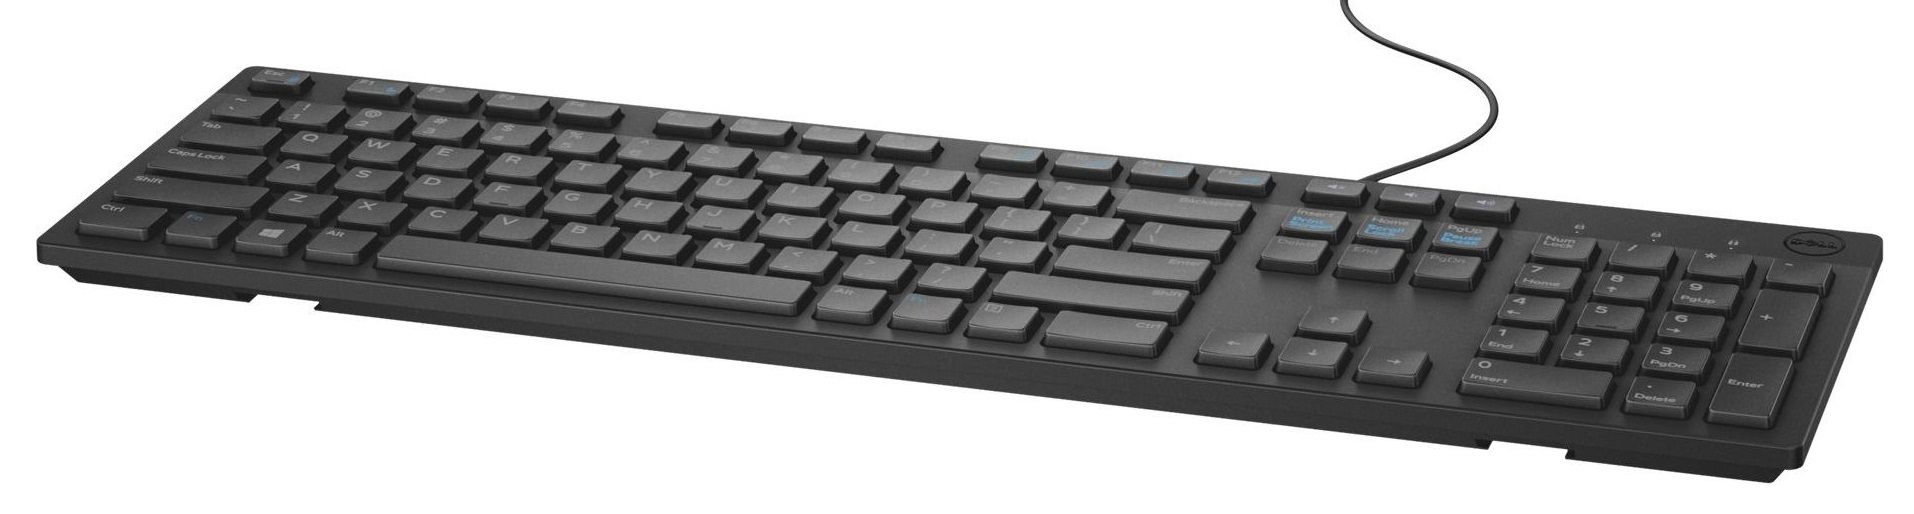 Keyboard Dell/KB216/USB